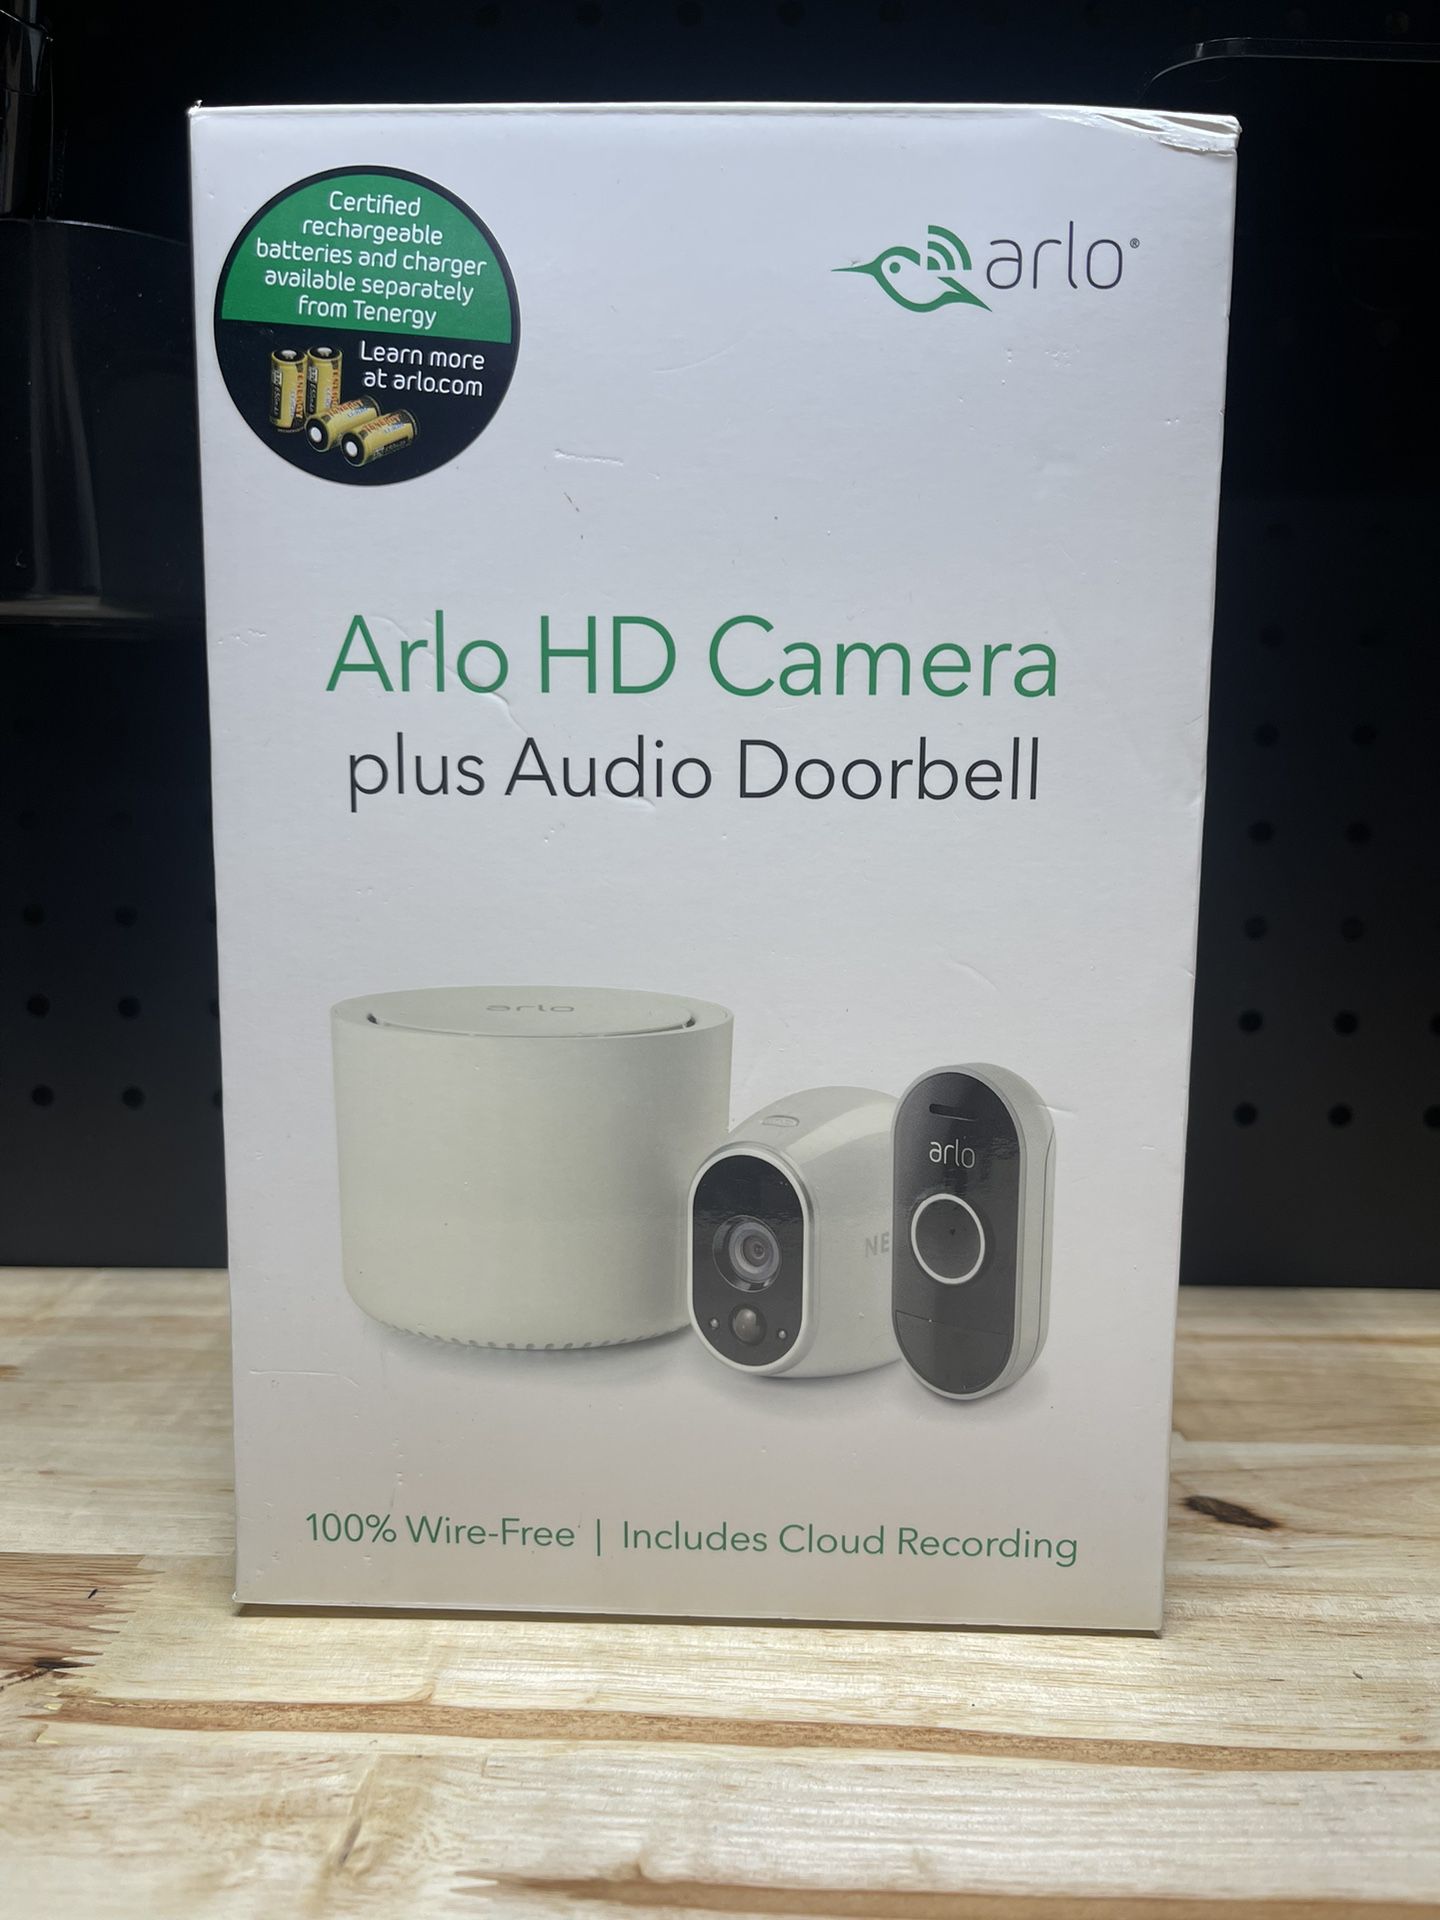 Arlo HD Camera+Audio Doorbell